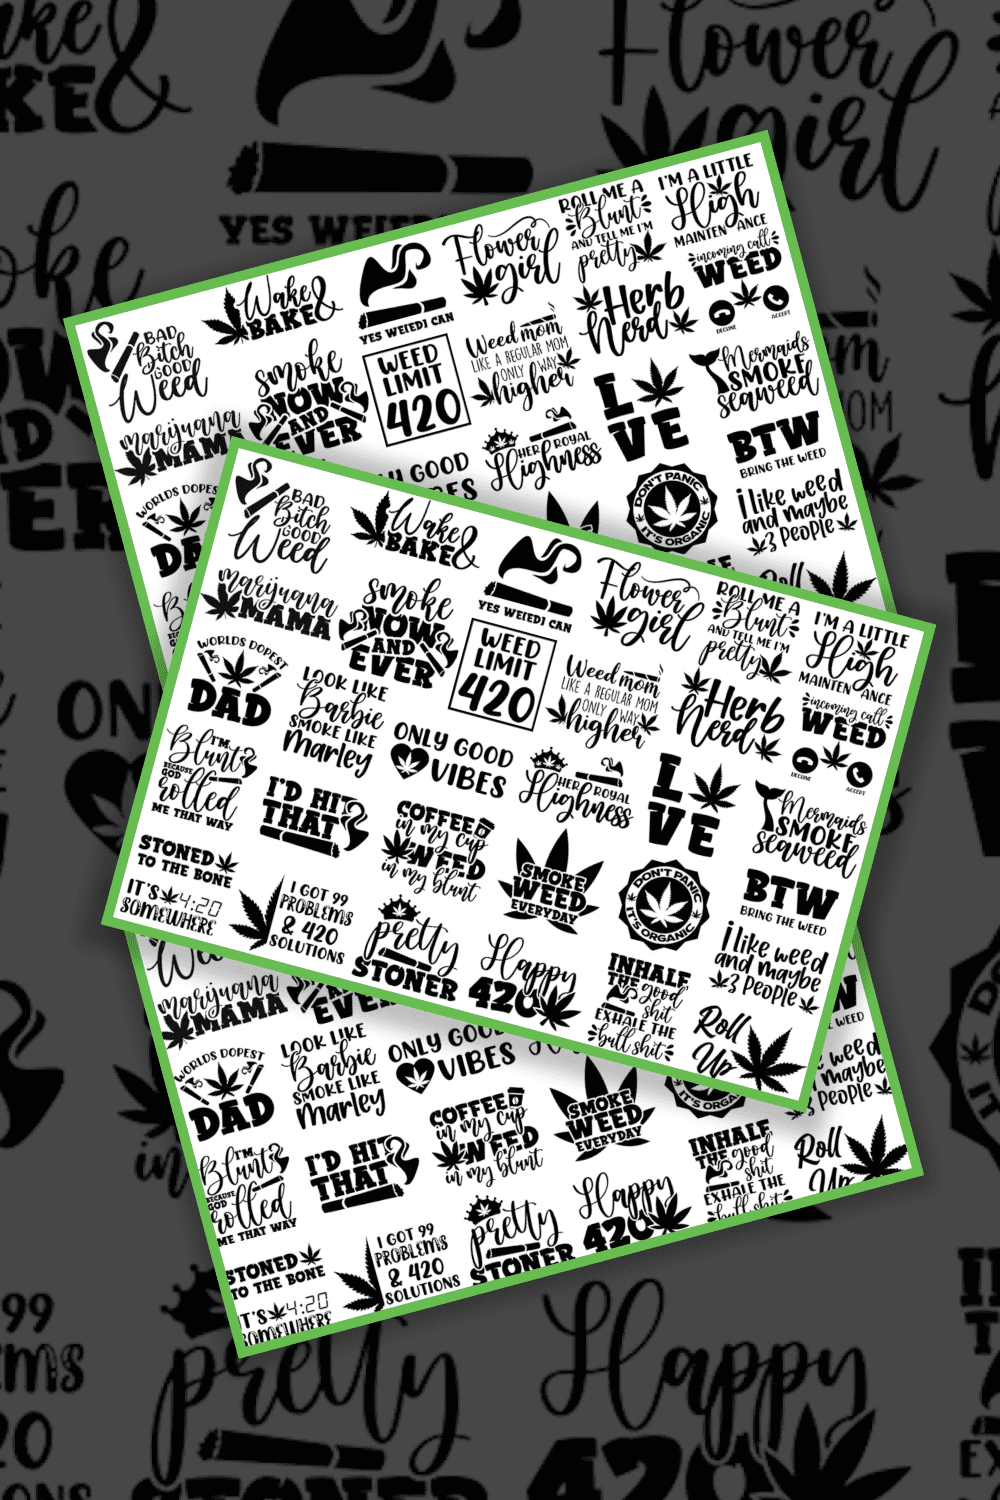 Cannabis SVG Bundle.